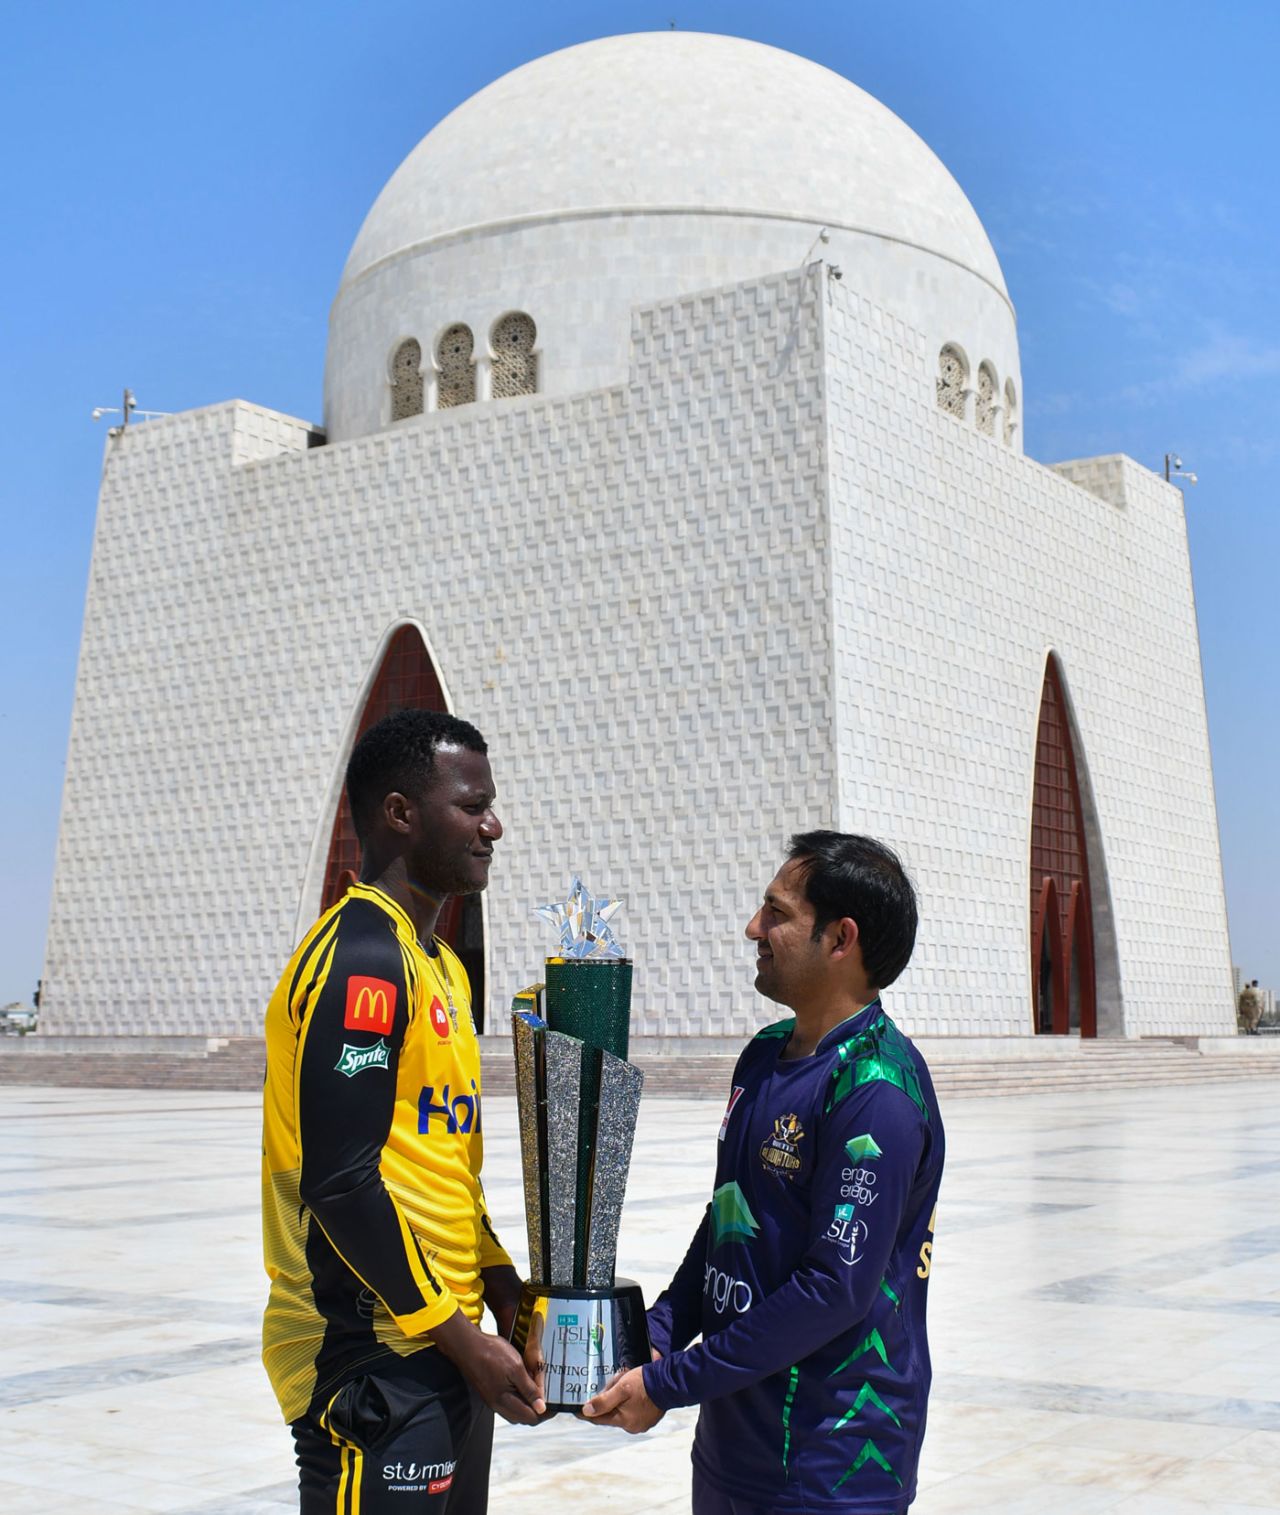 Darren Sammy and Sarfaraz Ahmed pose with the PSL 2019 trophy at Mazar-e-Quaid, Karachi, March 16, 2019